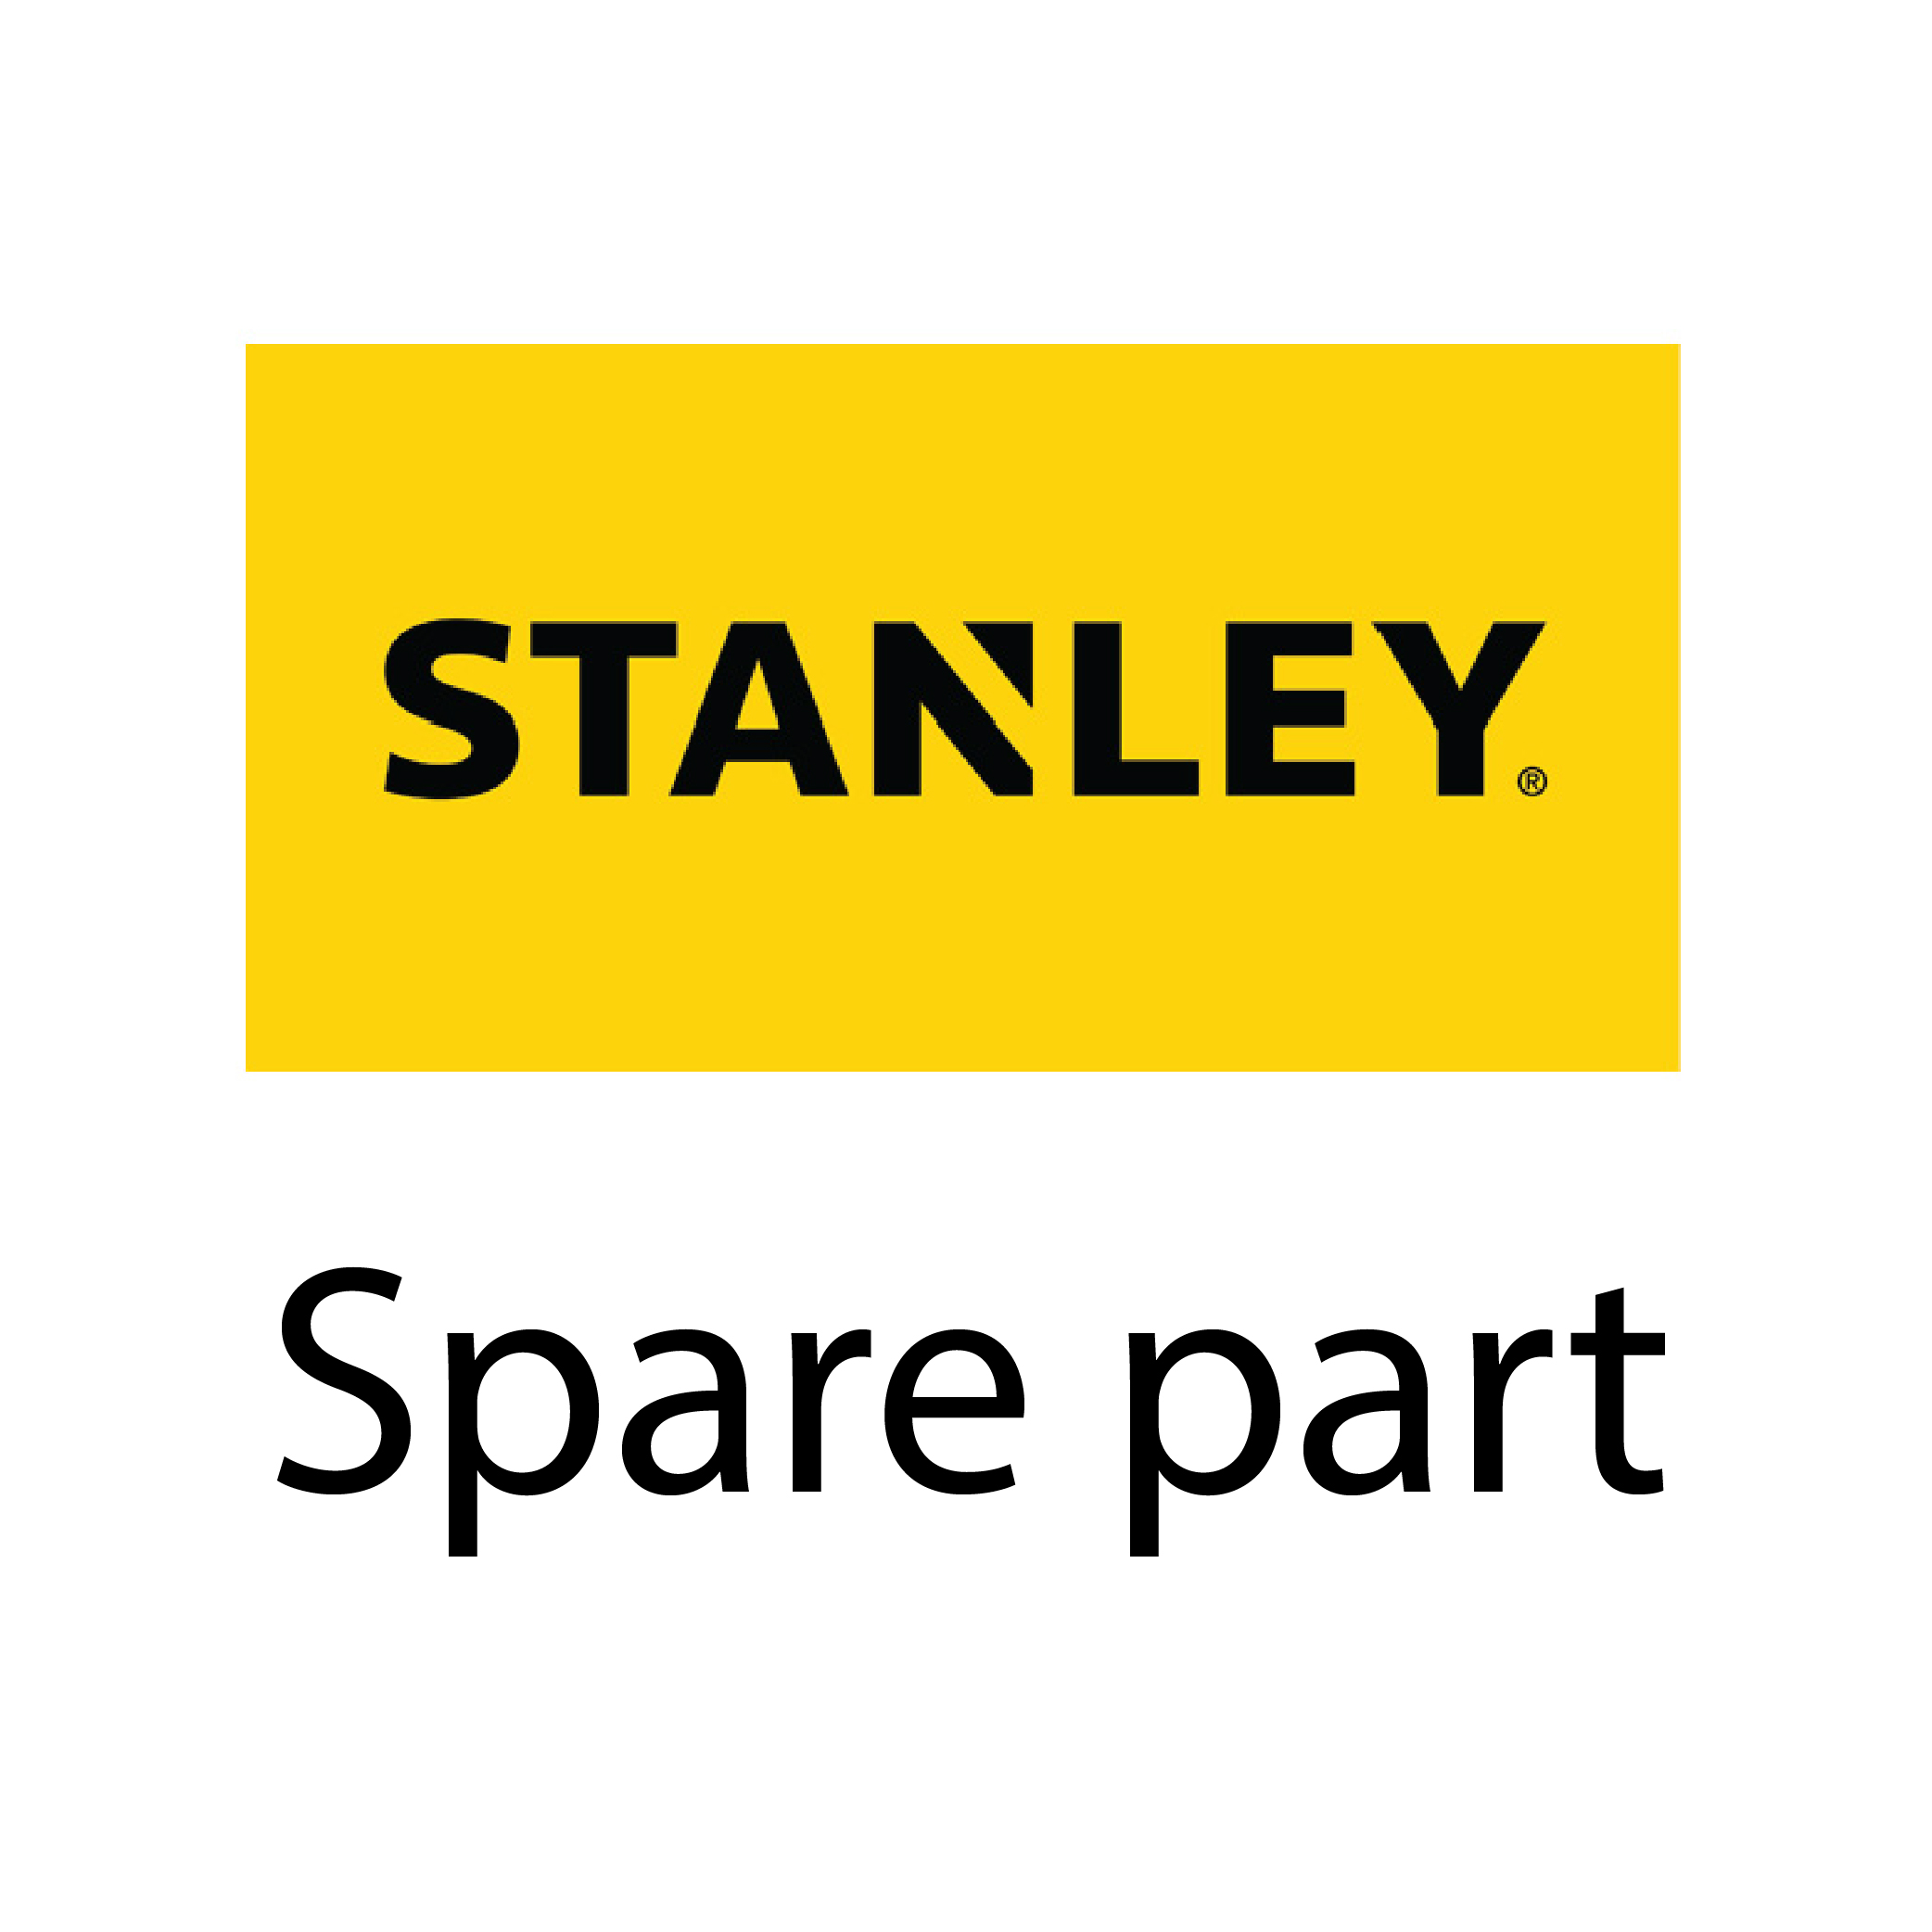 SKI - สกี จำหน่ายสินค้าหลากหลาย และคุณภาพดี | STANLEY #1004438-35 ฟิวคอยส์ STEL810